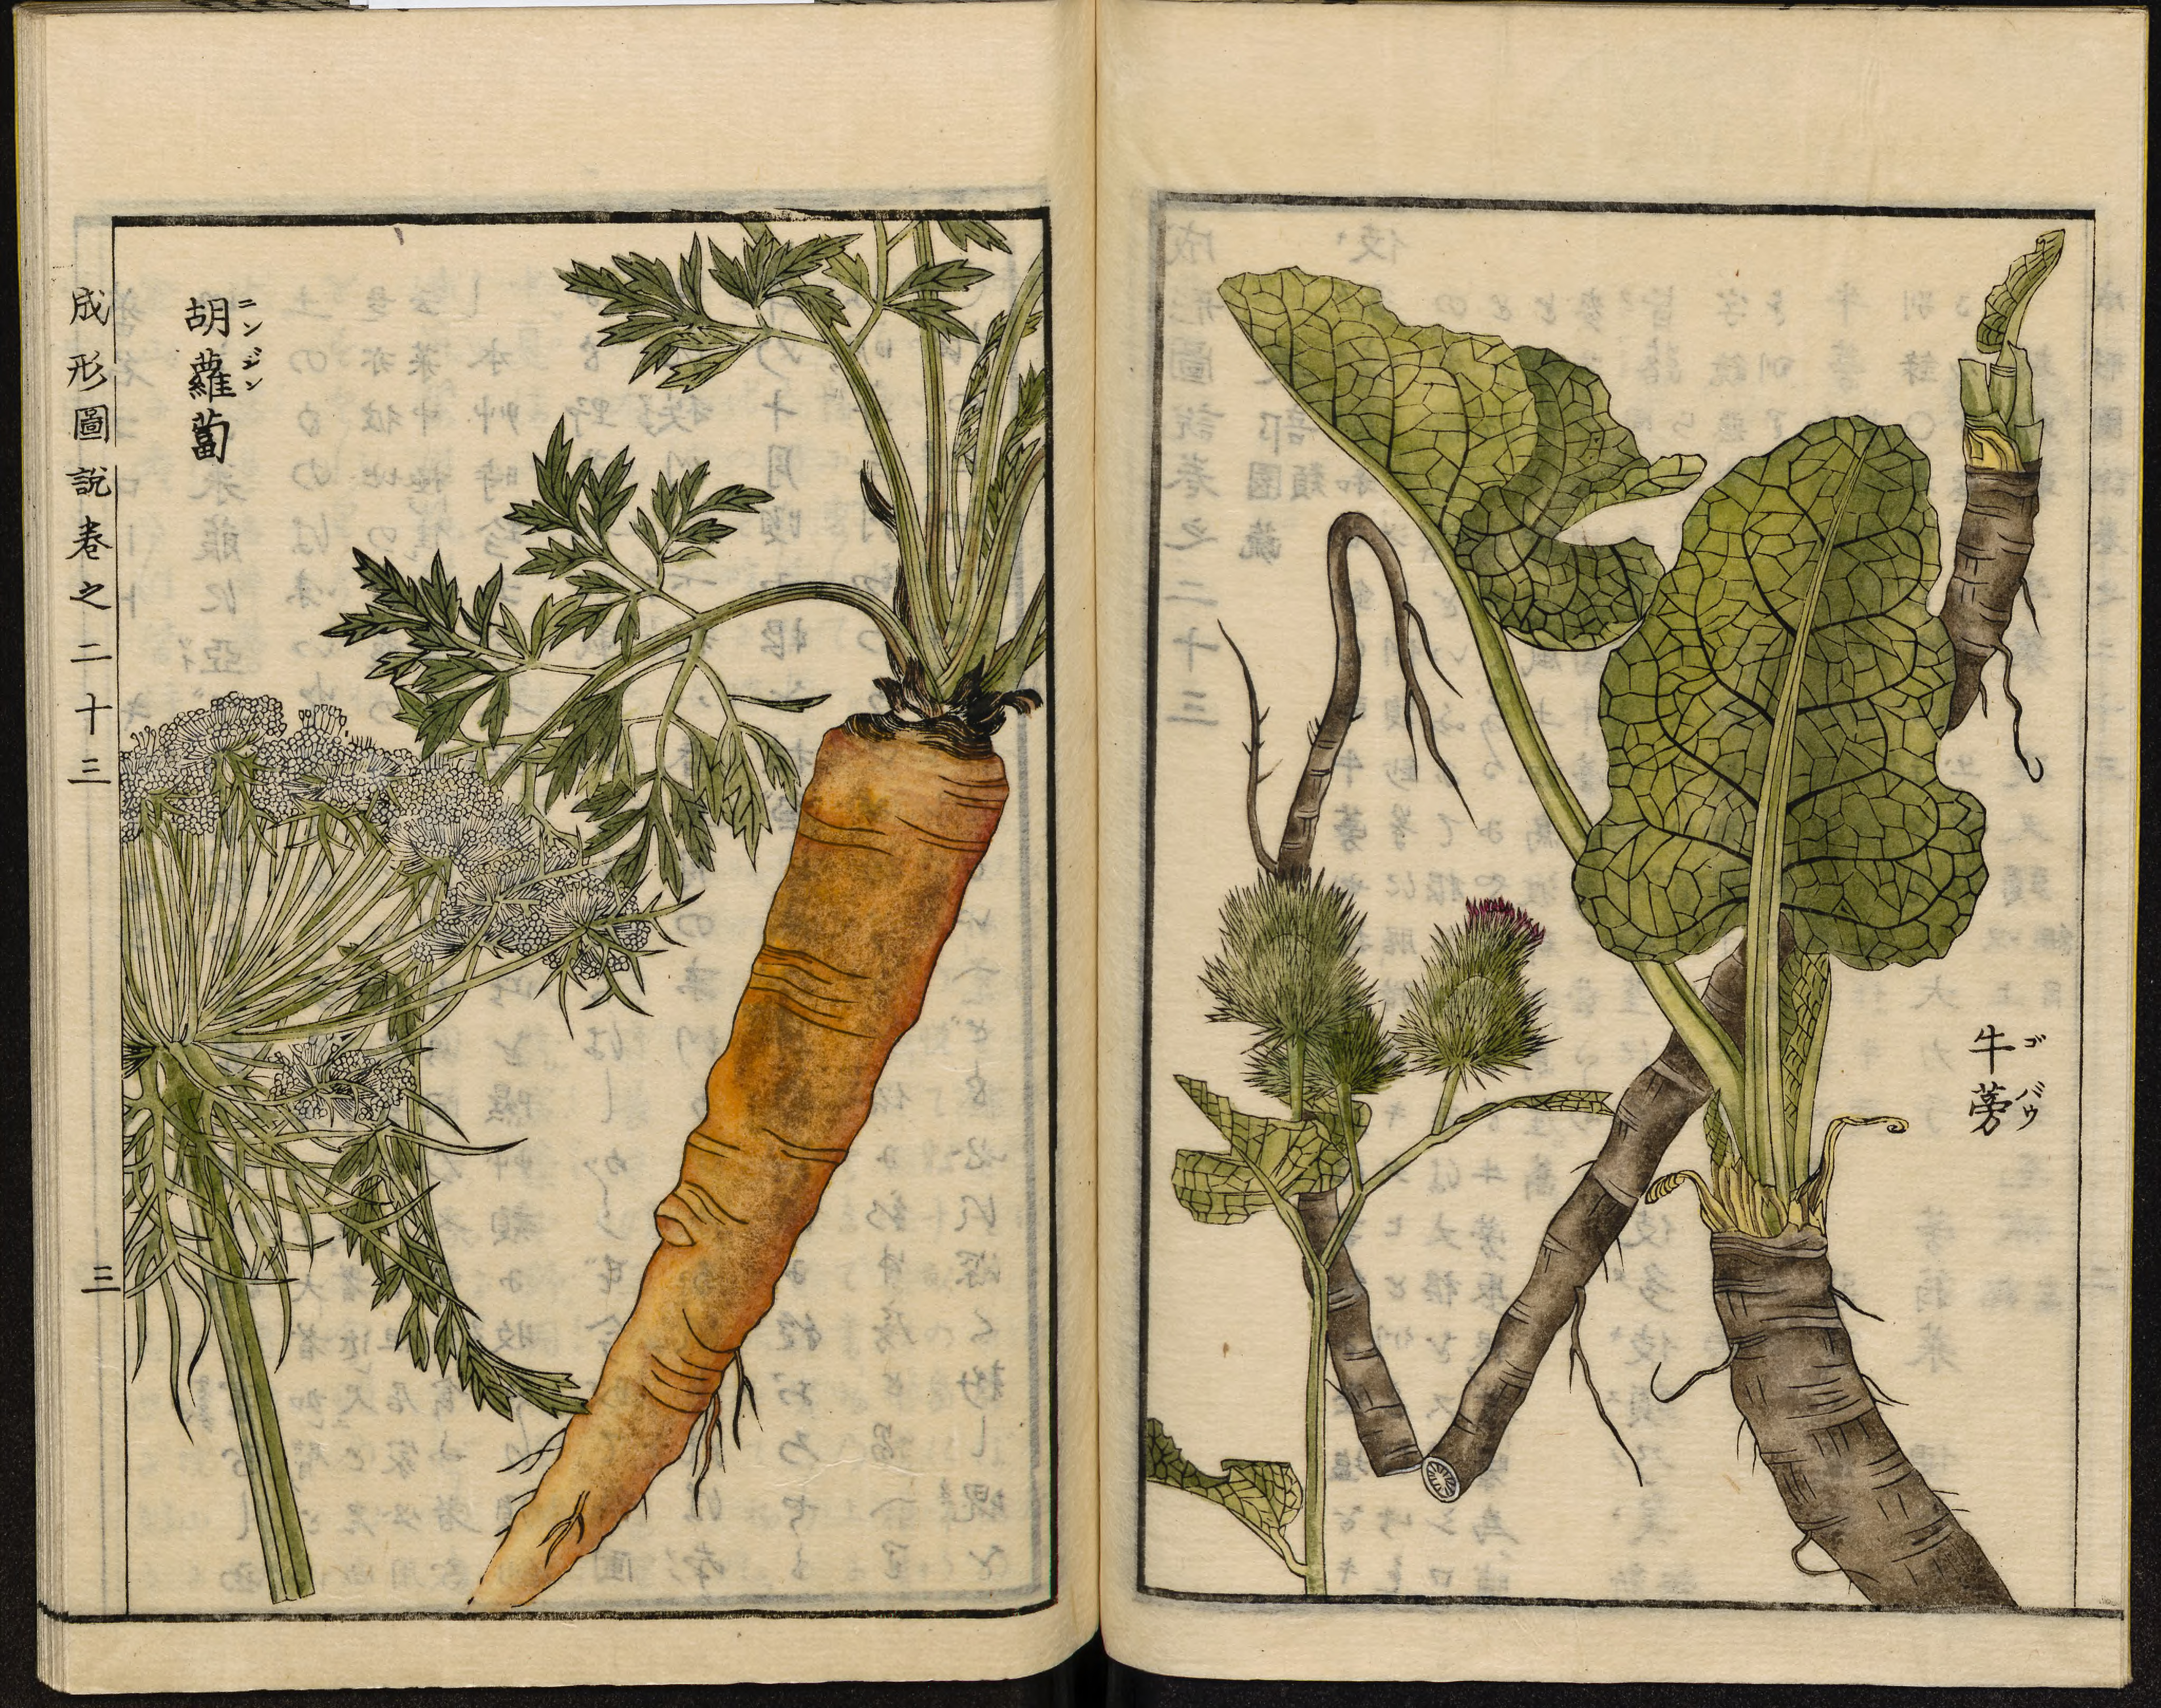 Leiden University Library - Seikei Zusetsu vol. 23, page 003 - 胡蘿蔔 - Daucus carota L. - 牛蒡 - Arctium lappa L., 1804